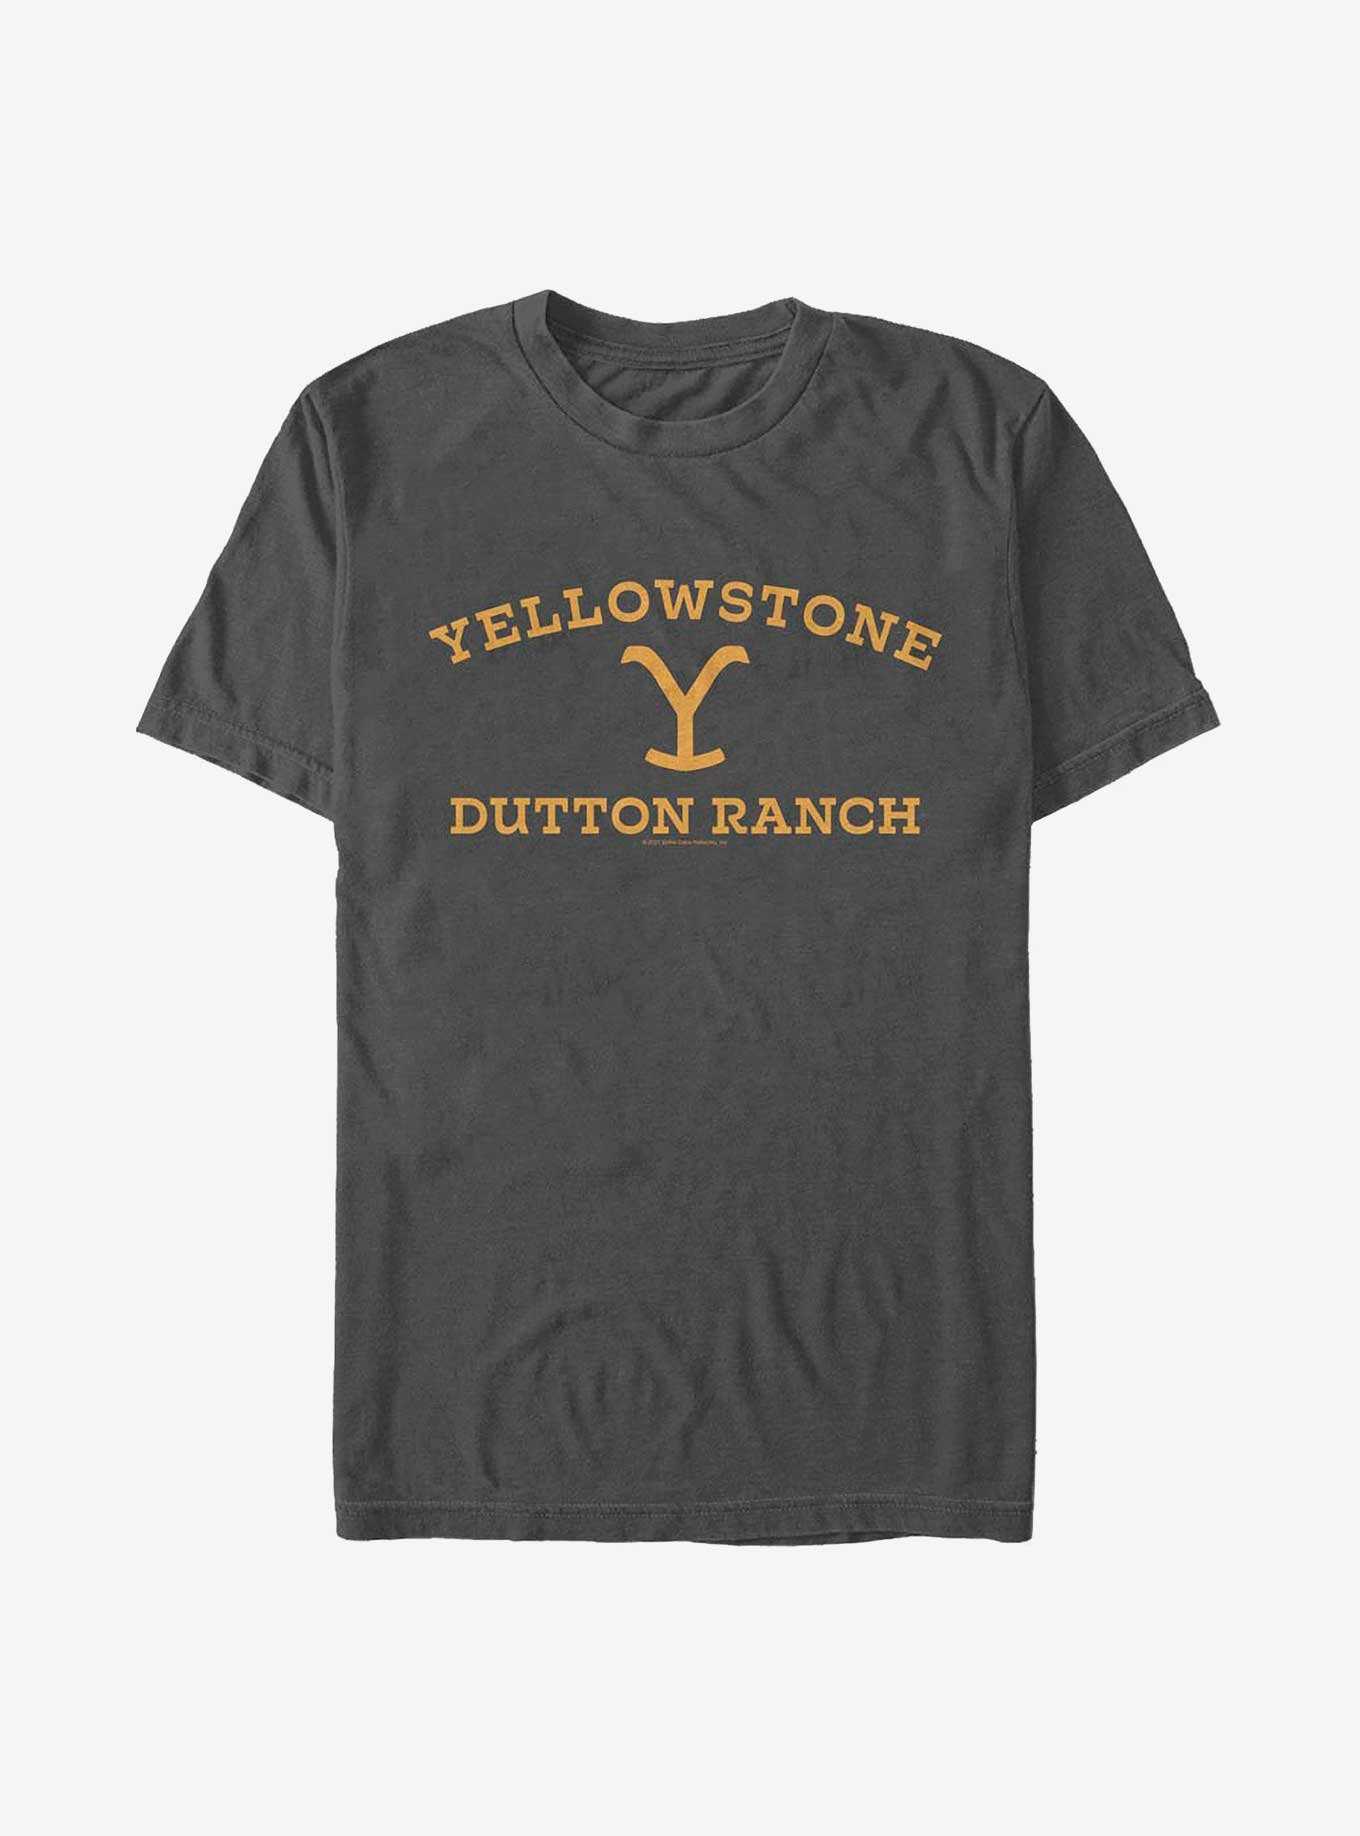 Yellowstone Dutton Ranch Logo T-Shirt, , hi-res